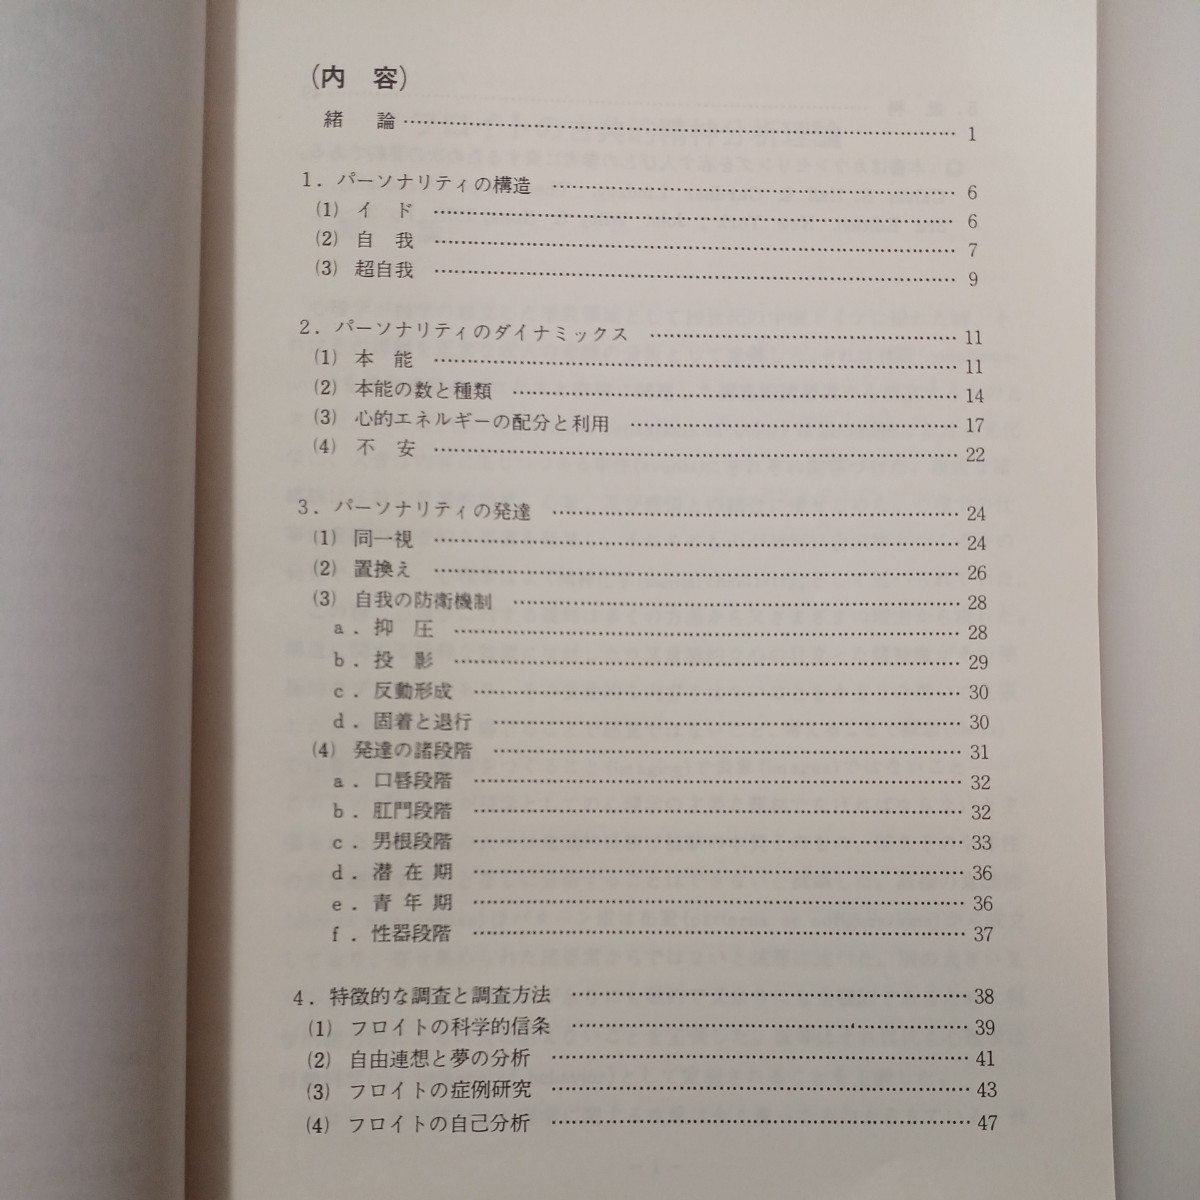 zaa-535♪フロイトの古典的精神分析理論　関西大学教授　行田忠雄(編) 関西カウセリング協会　 1984年9月